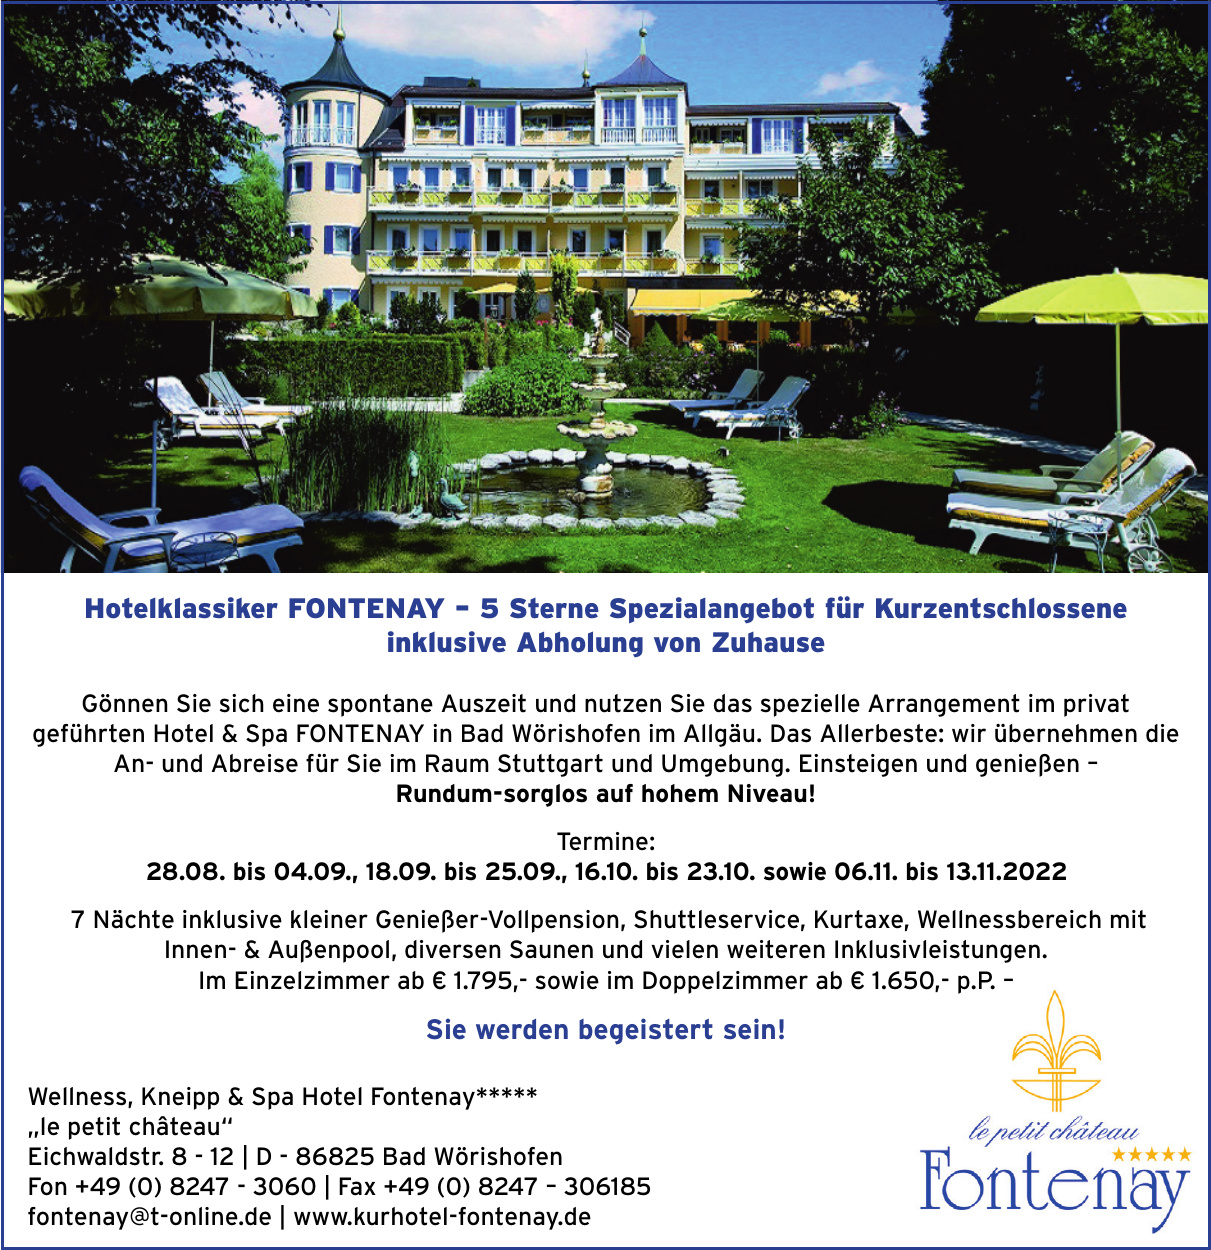 Wellness, Kneipp & Spa Hotel Fontenay*****